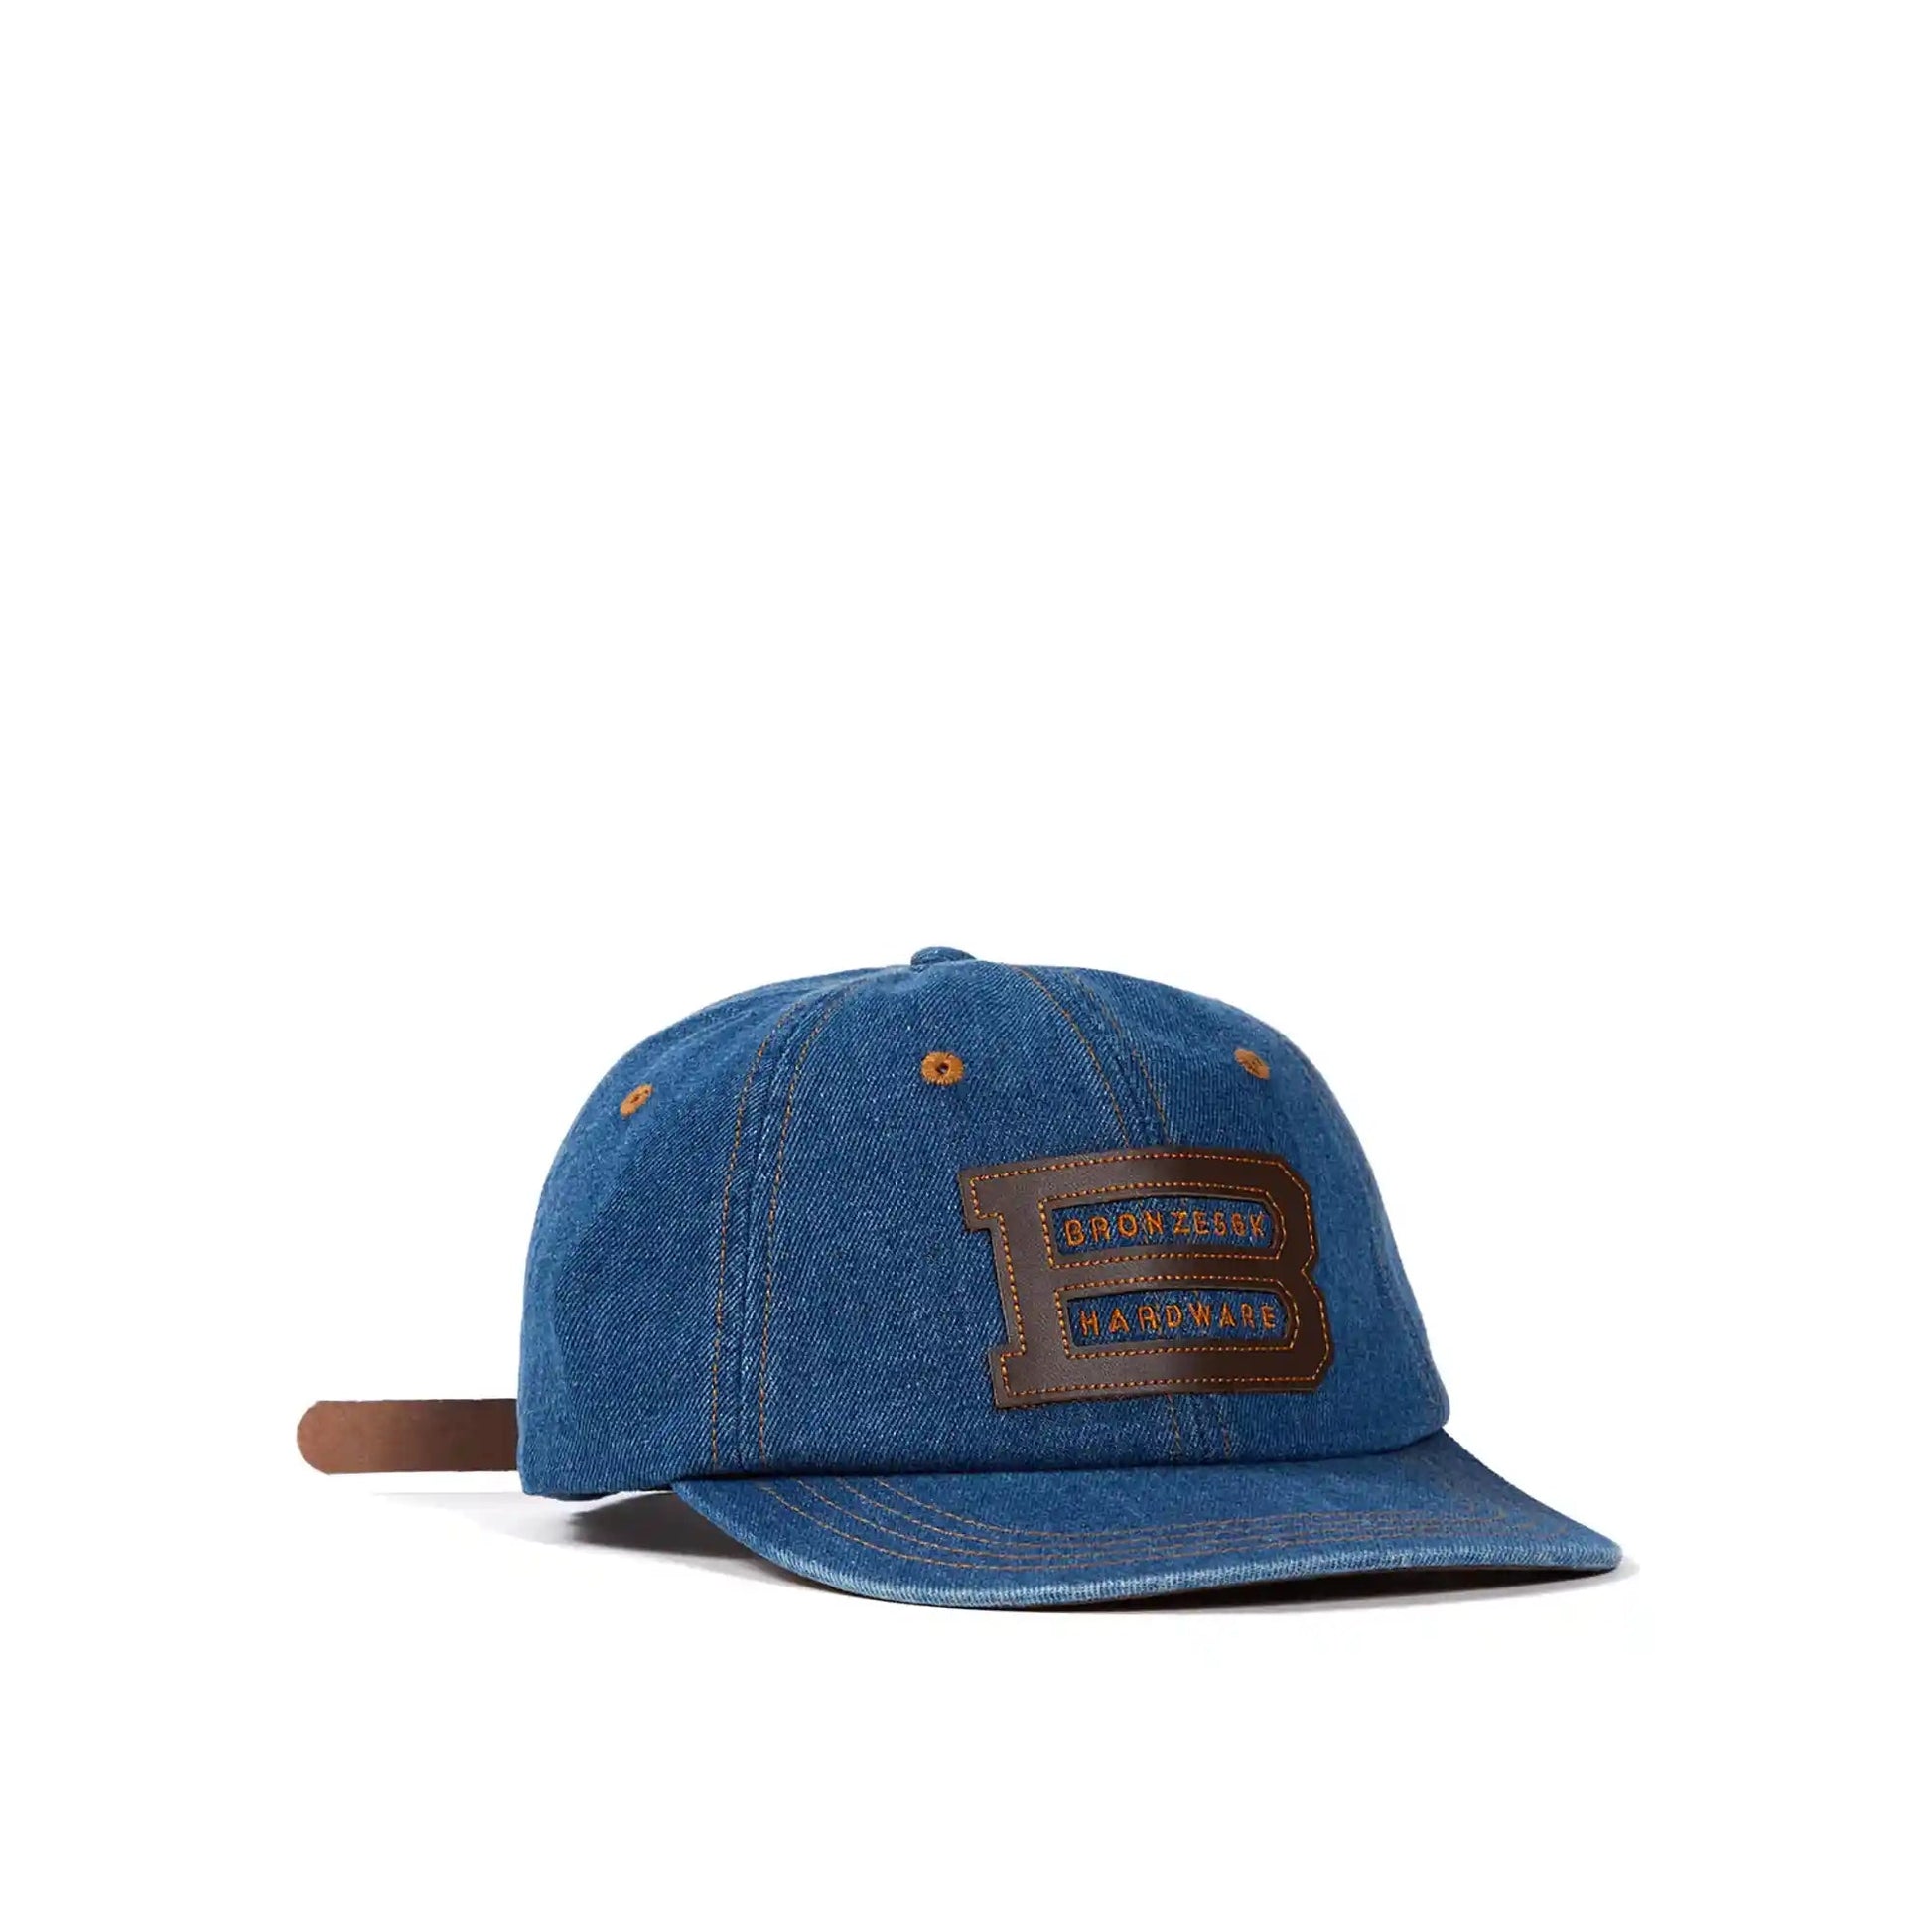 Bronze XLB Denim Hat, blue - Tiki Room Skateboards - 1